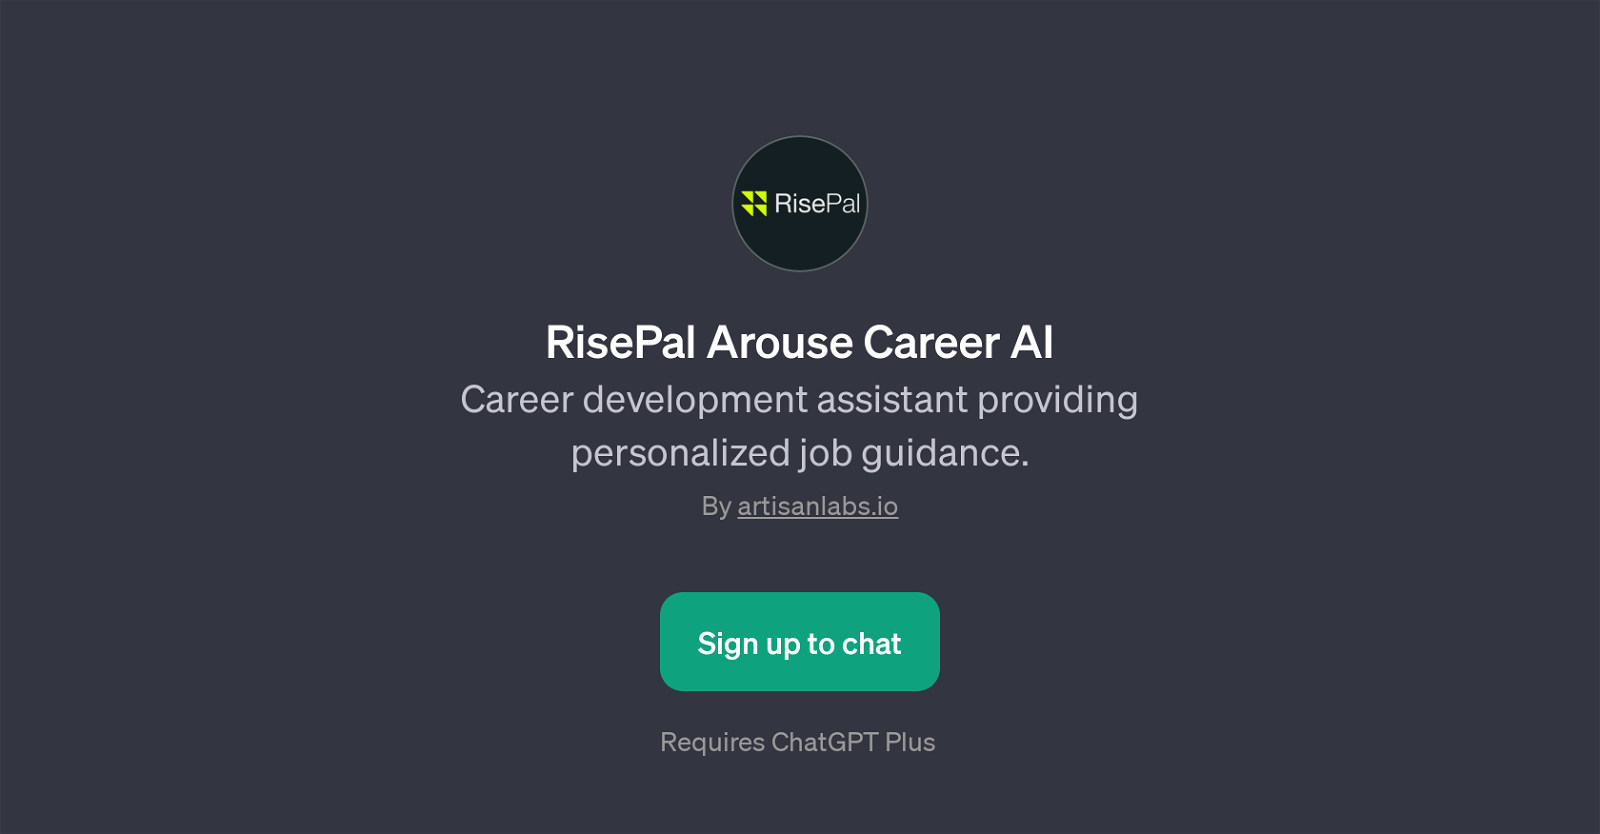 RisePal Arouse Career AI website